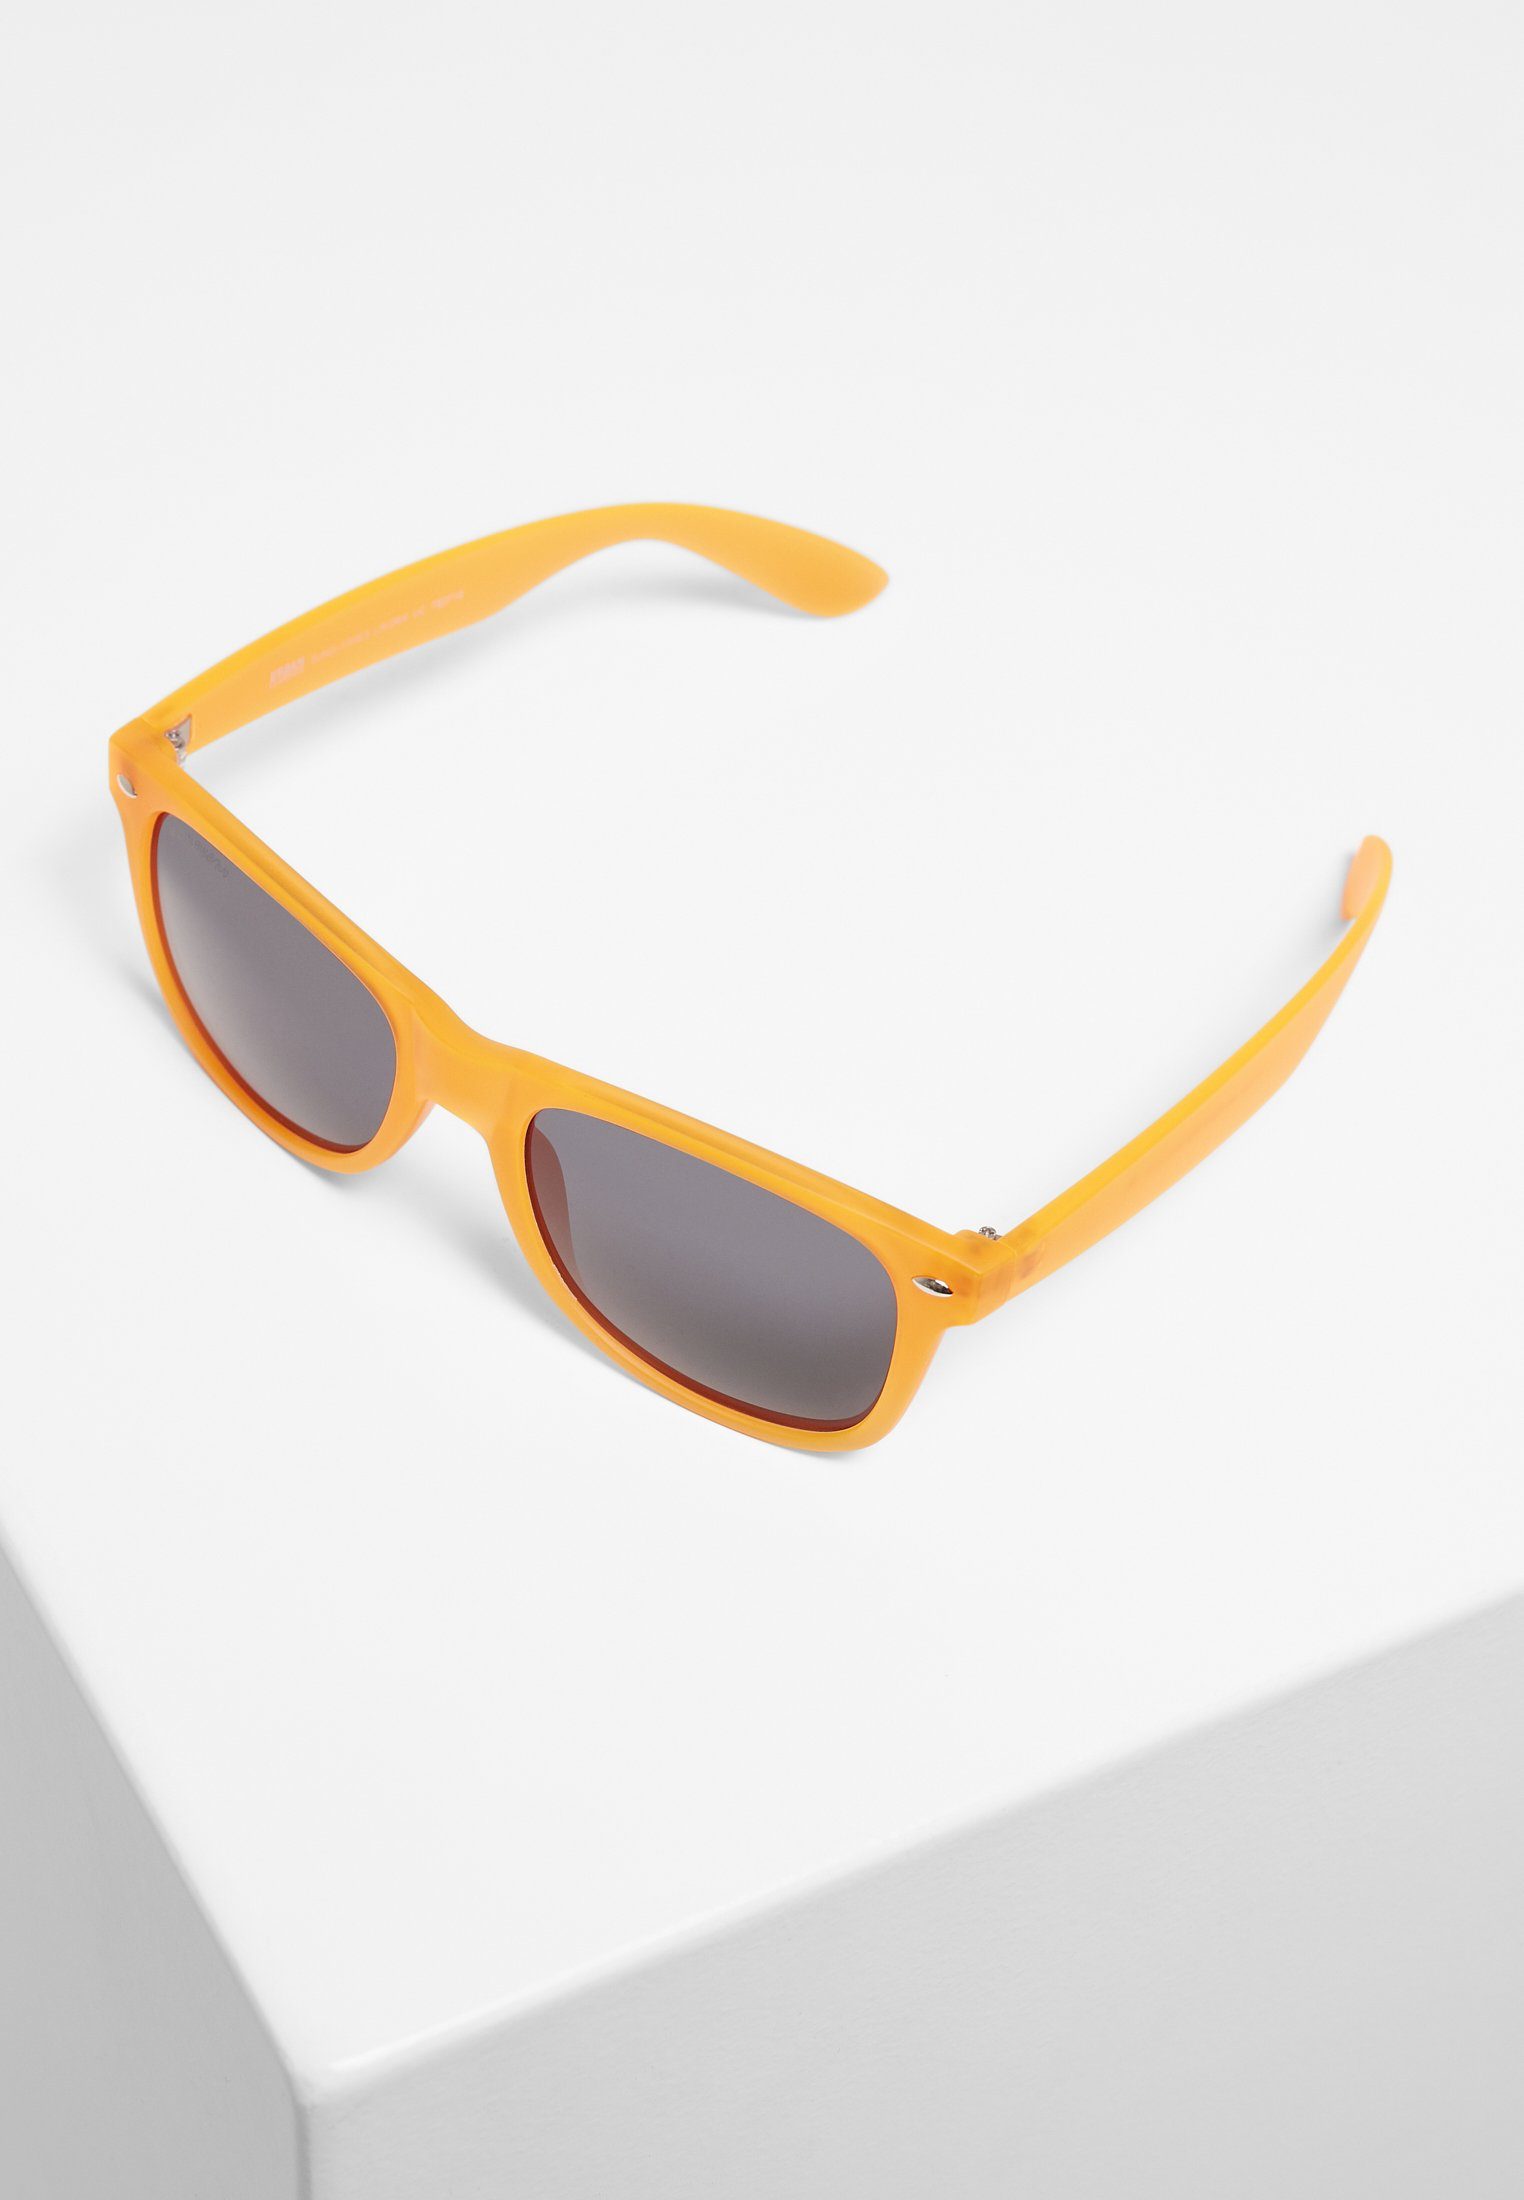 Sunglasses CLASSICS URBAN Sonnenbrille Likoma Accessoires neonorange UC